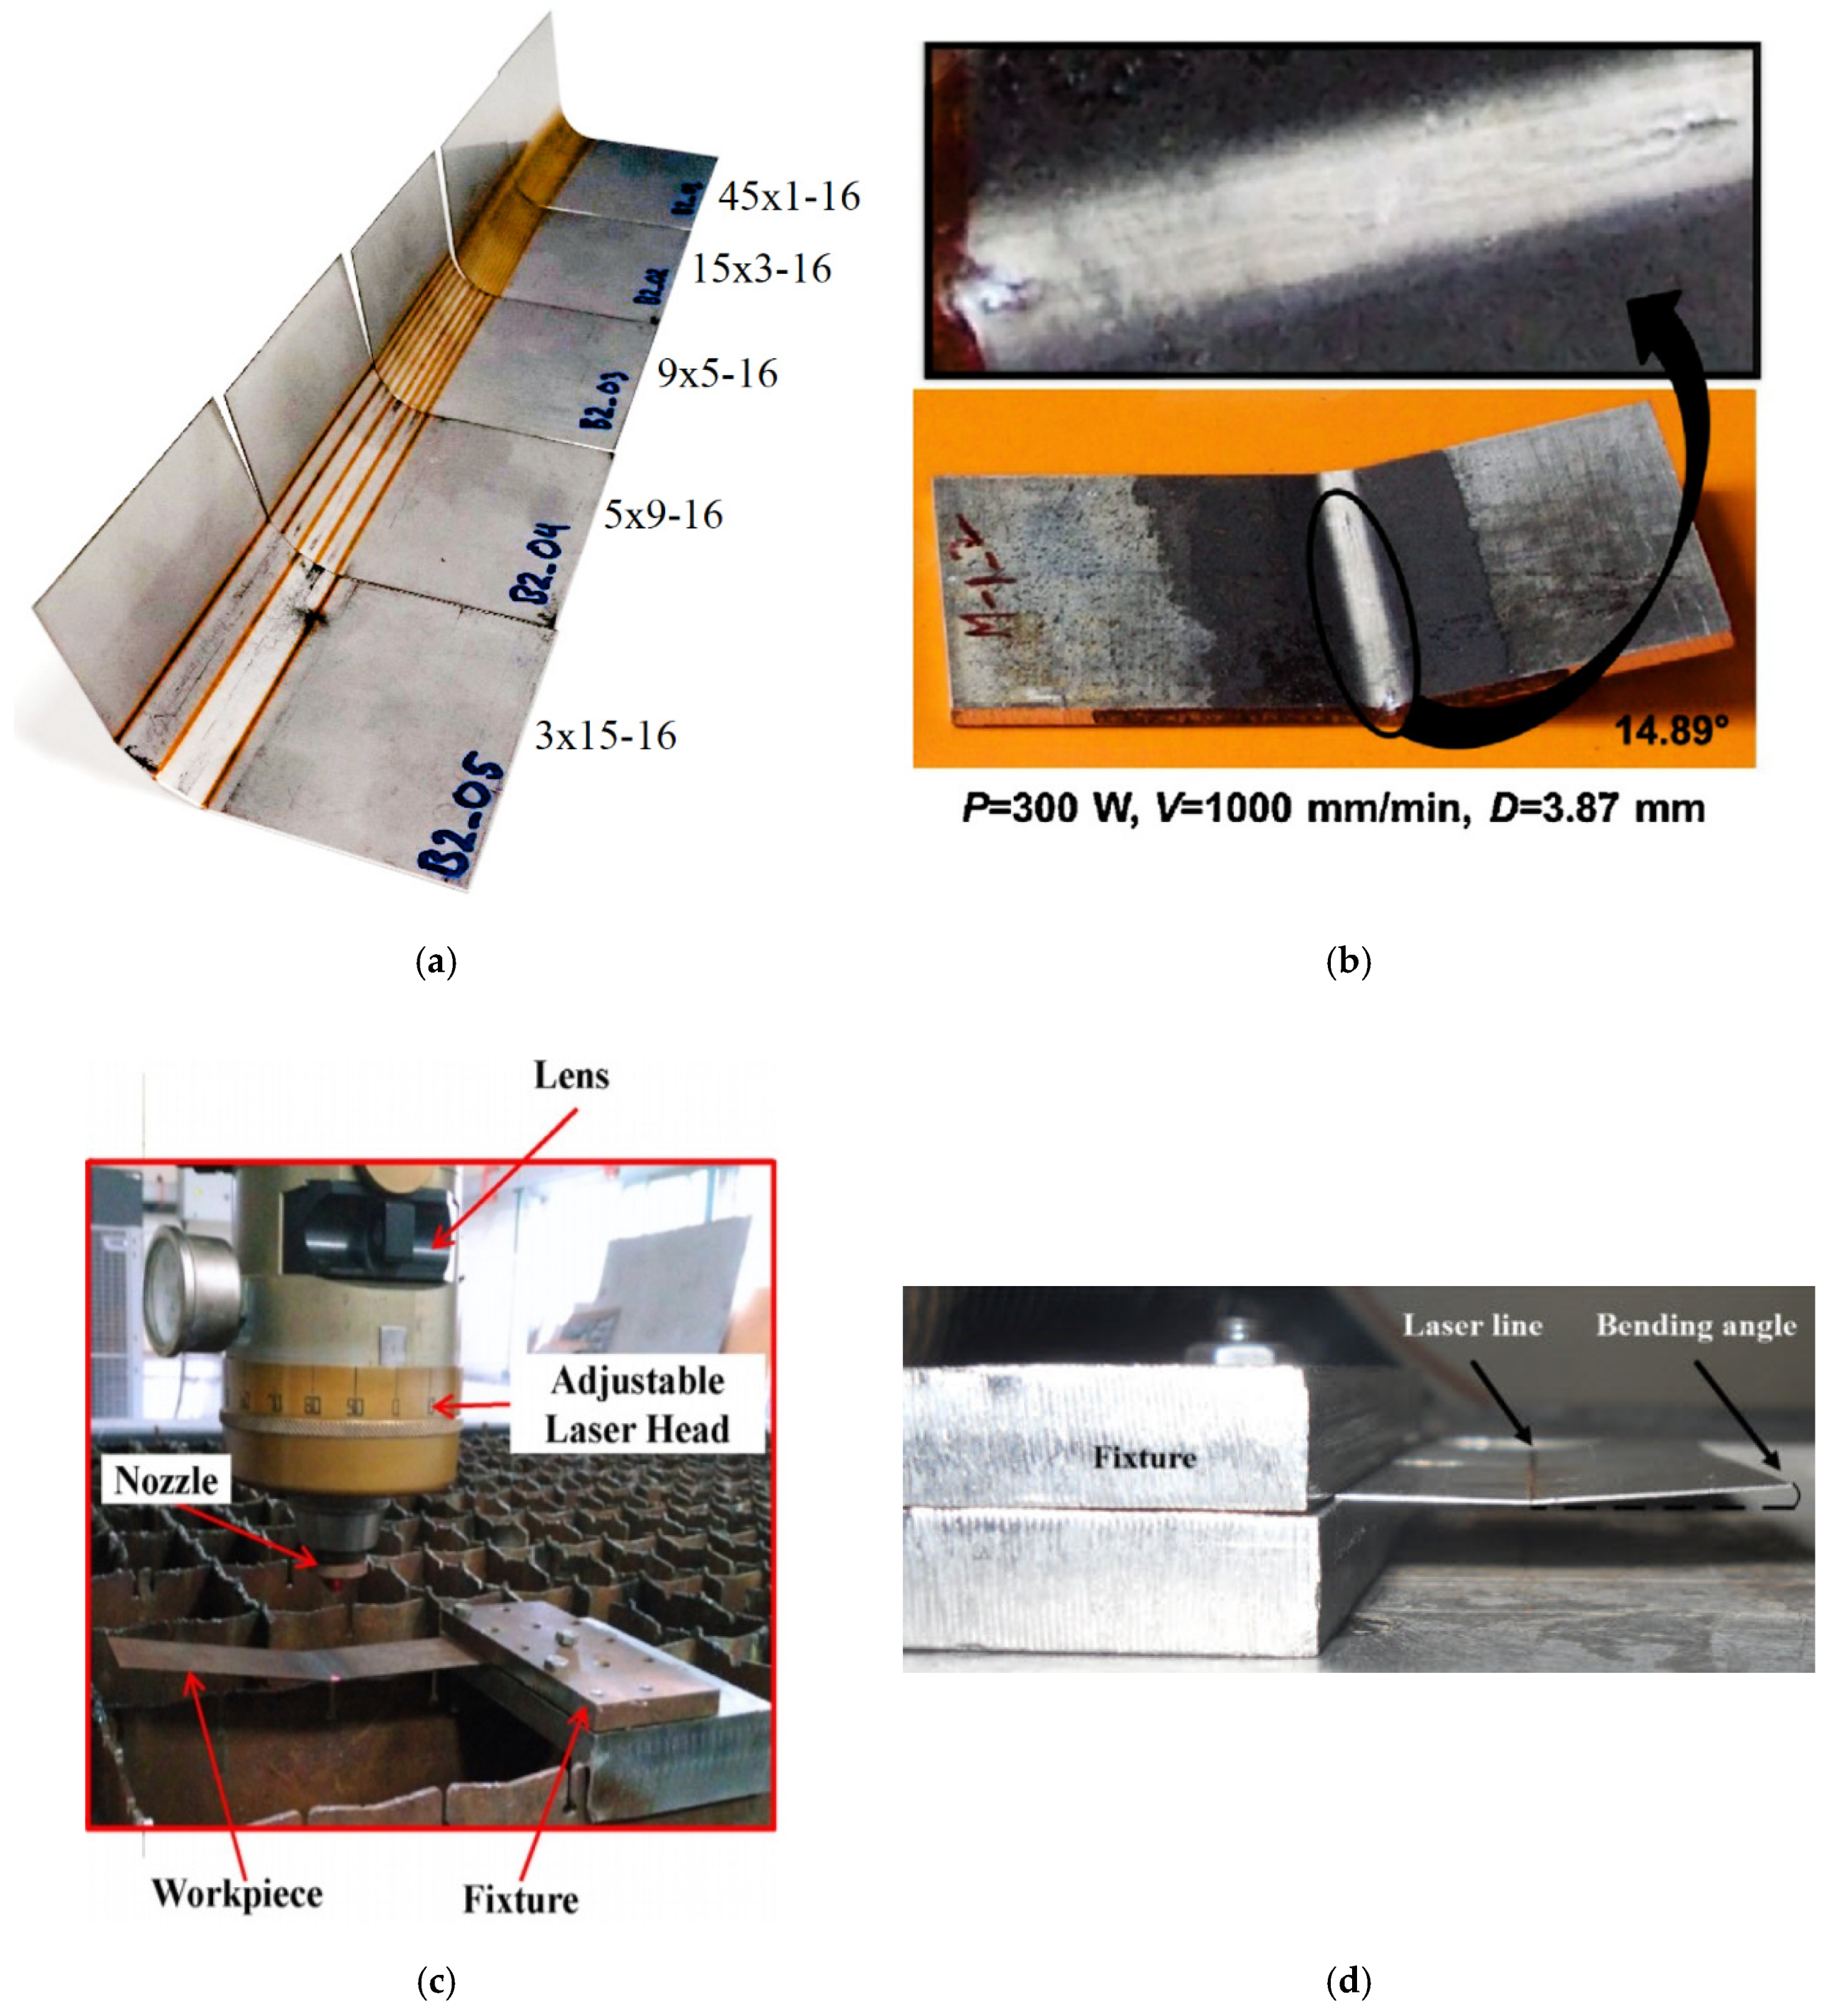  1/4 Holes 16 Gauge 304 Stainless Steel Perforated Sheet- 12 X  12 : Industrial & Scientific